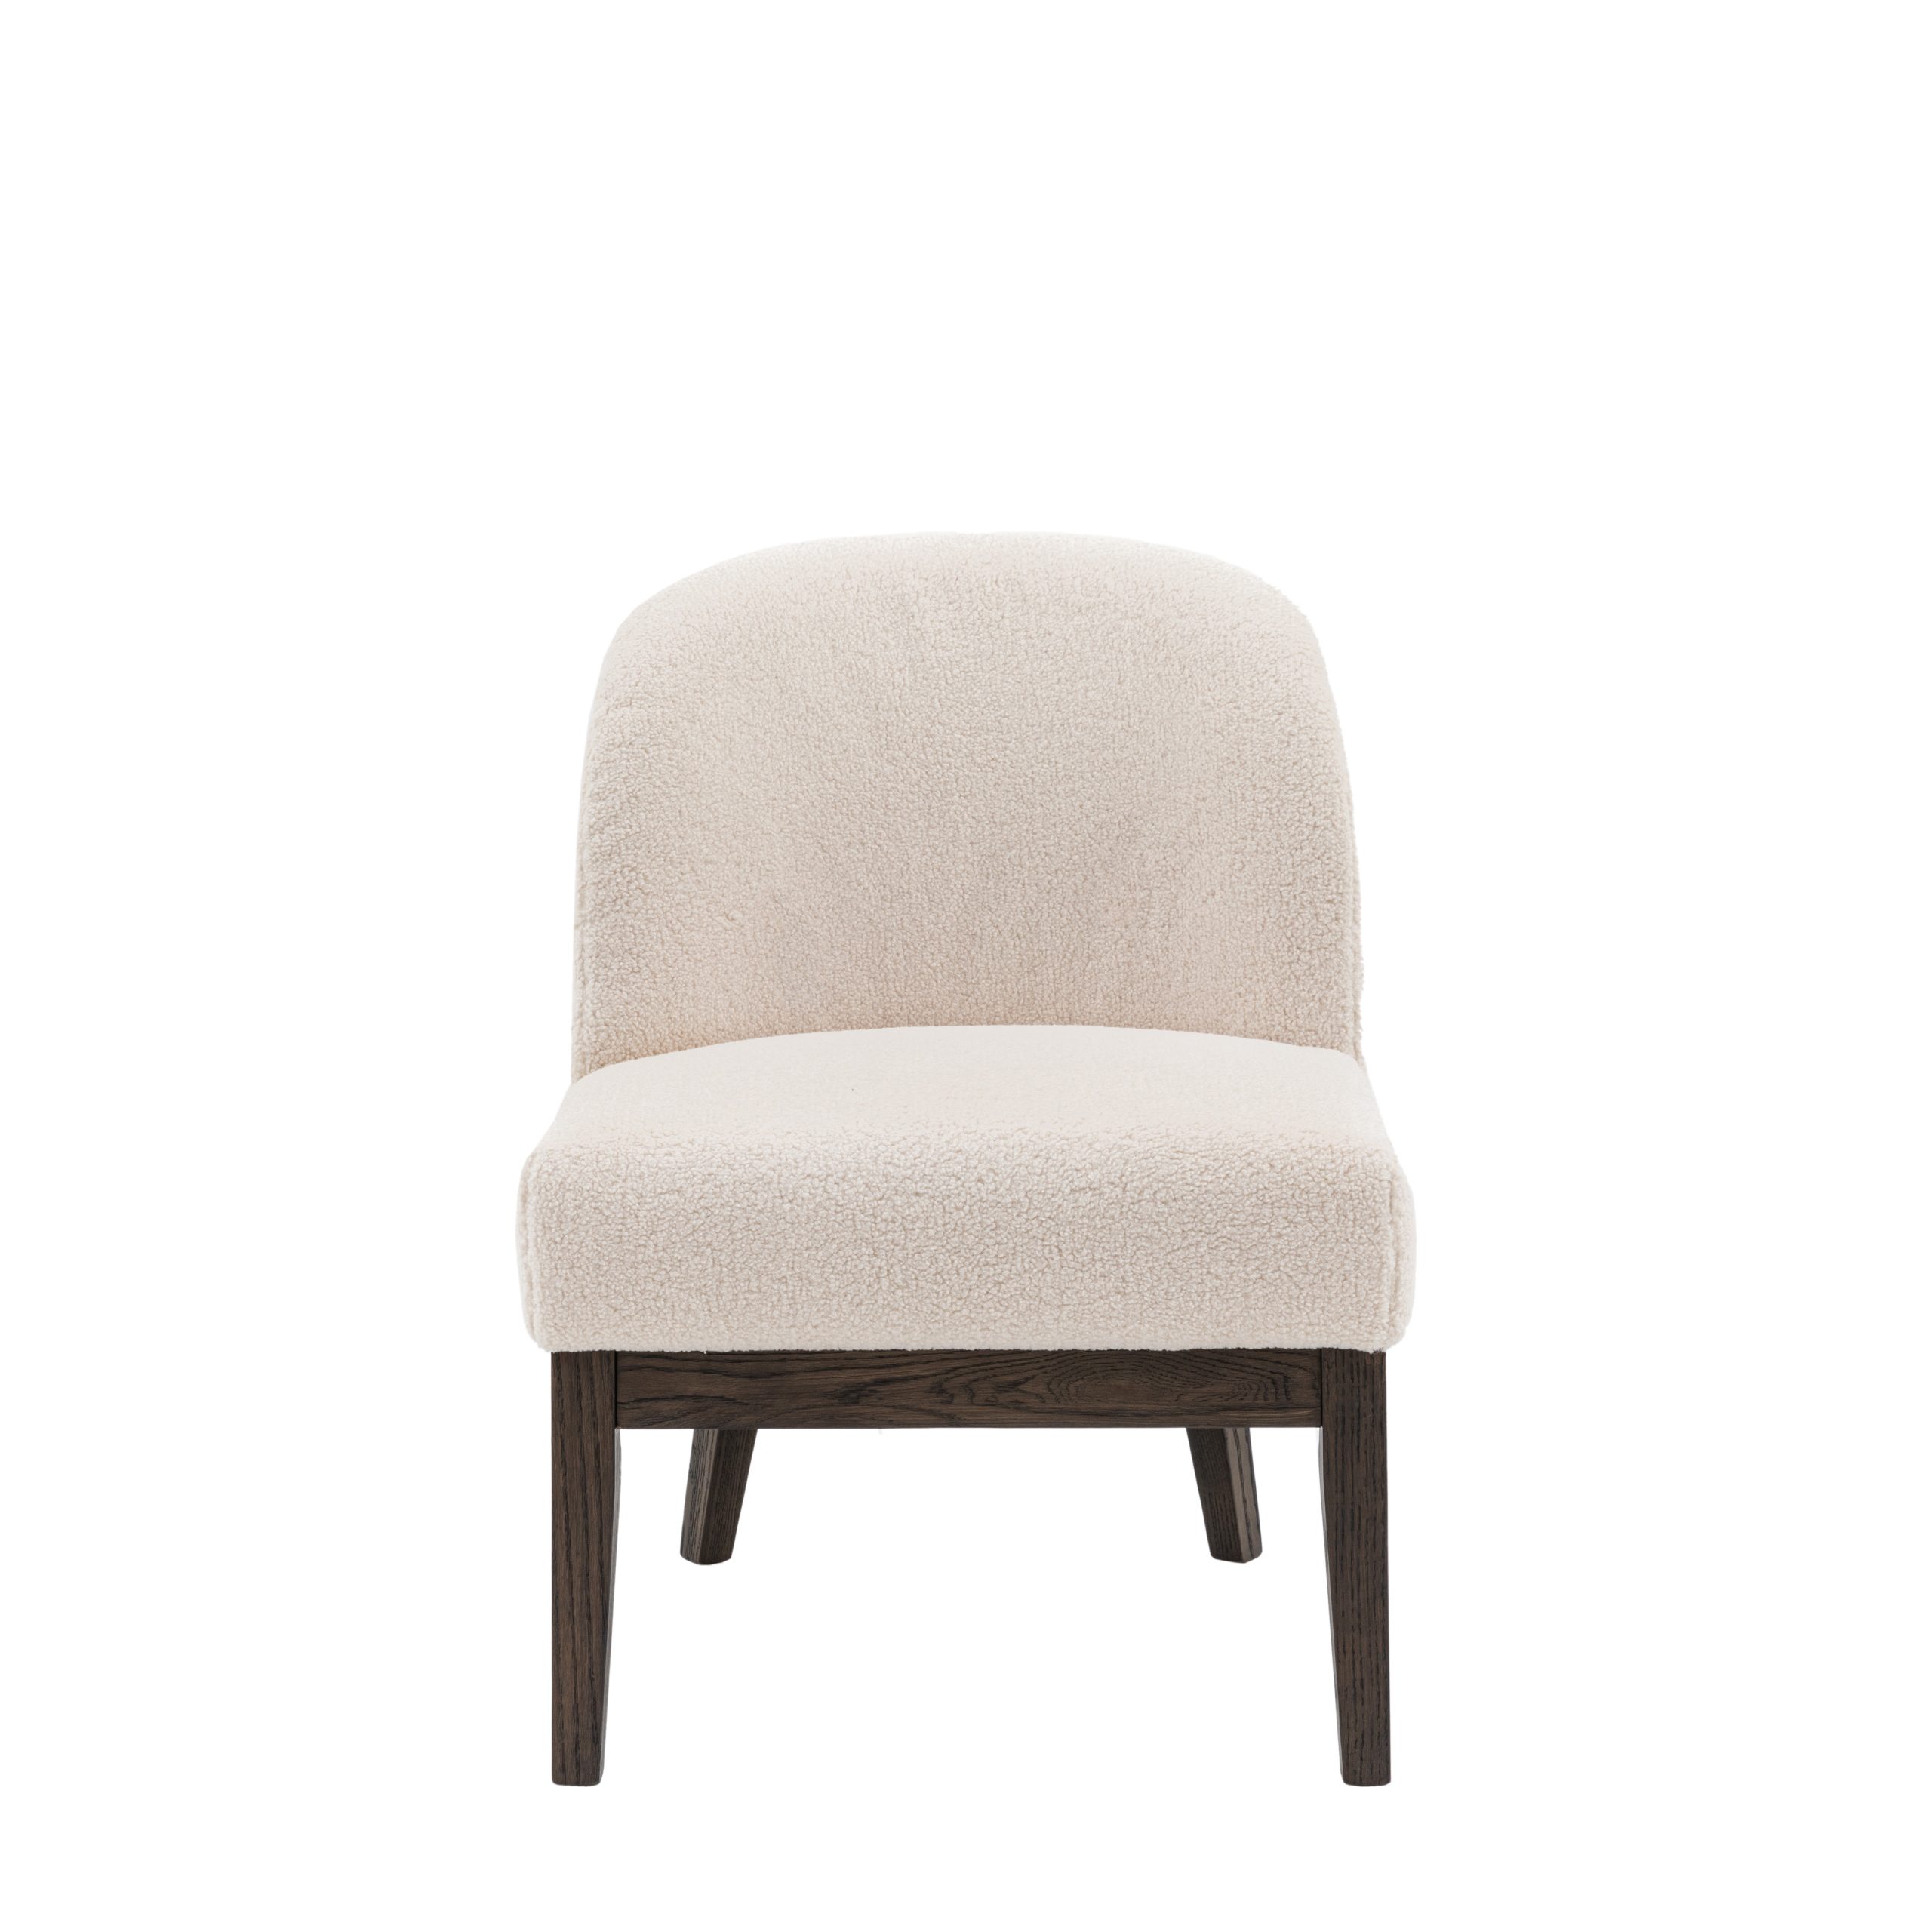 Gallery Direct Bardfield Chair Vanilla